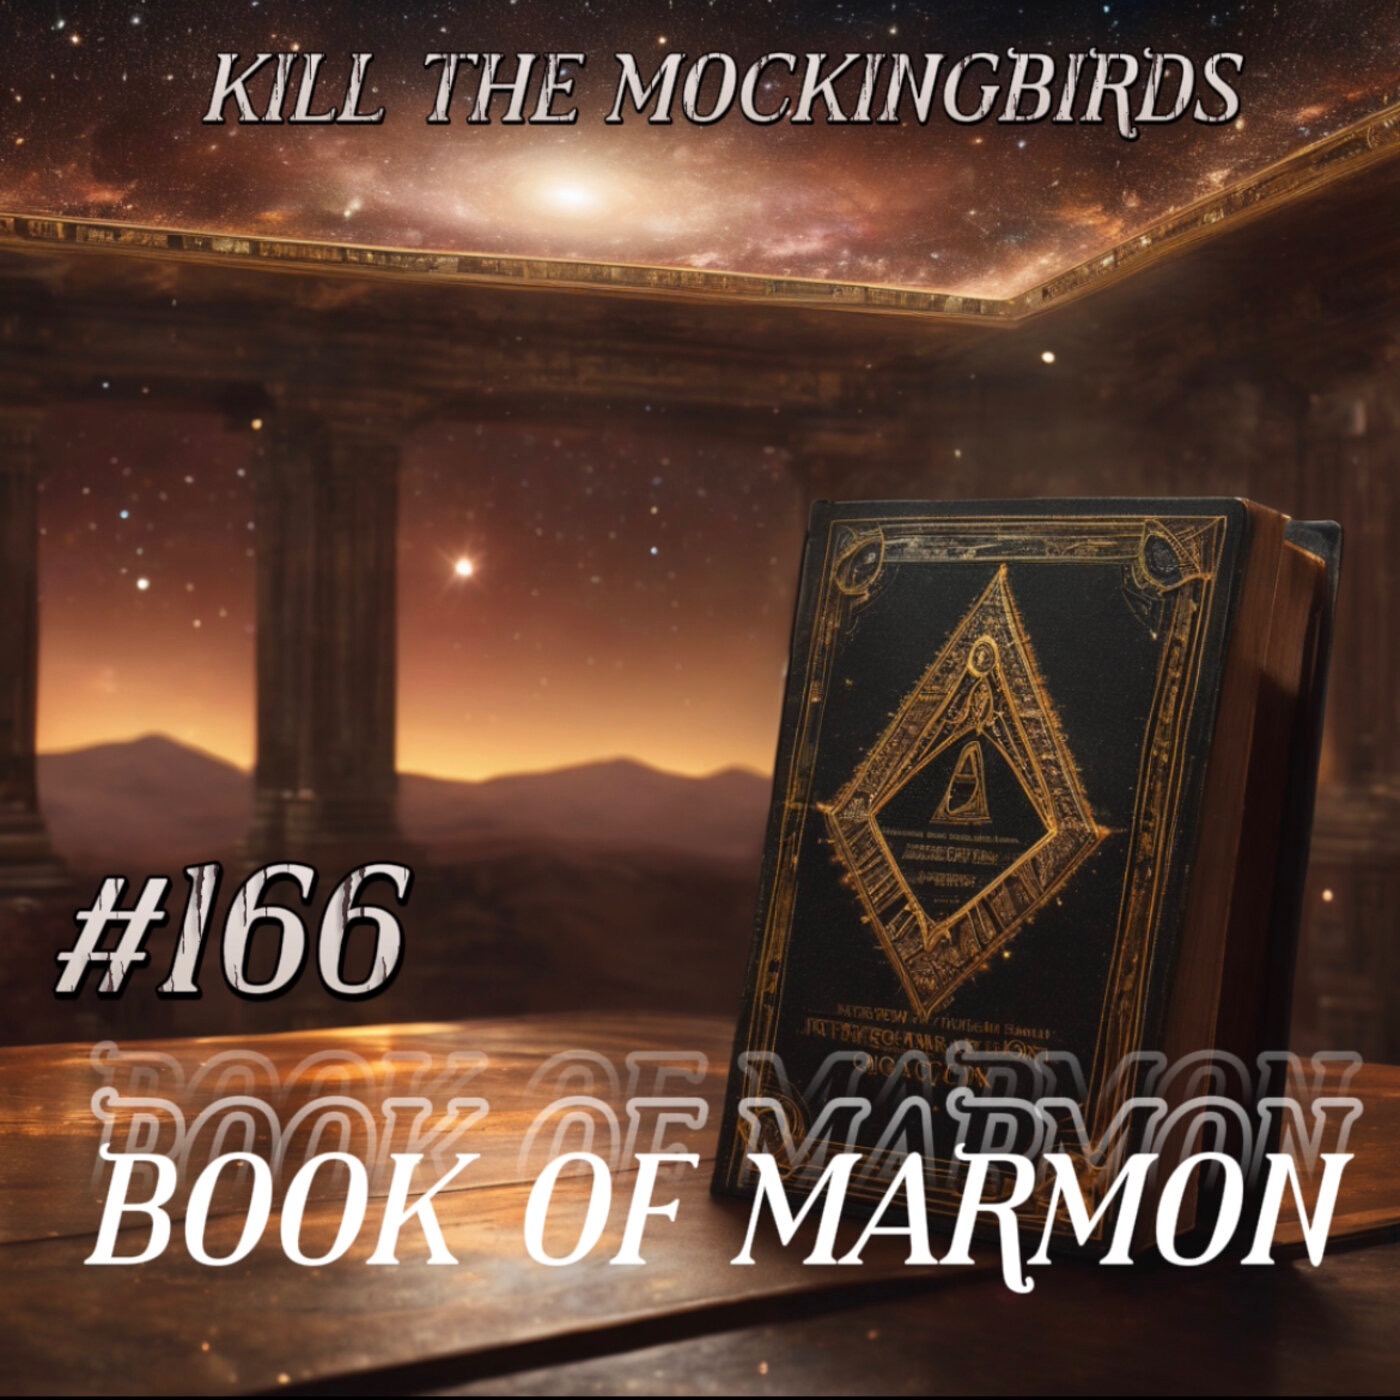 #166 “Book of Mormon”